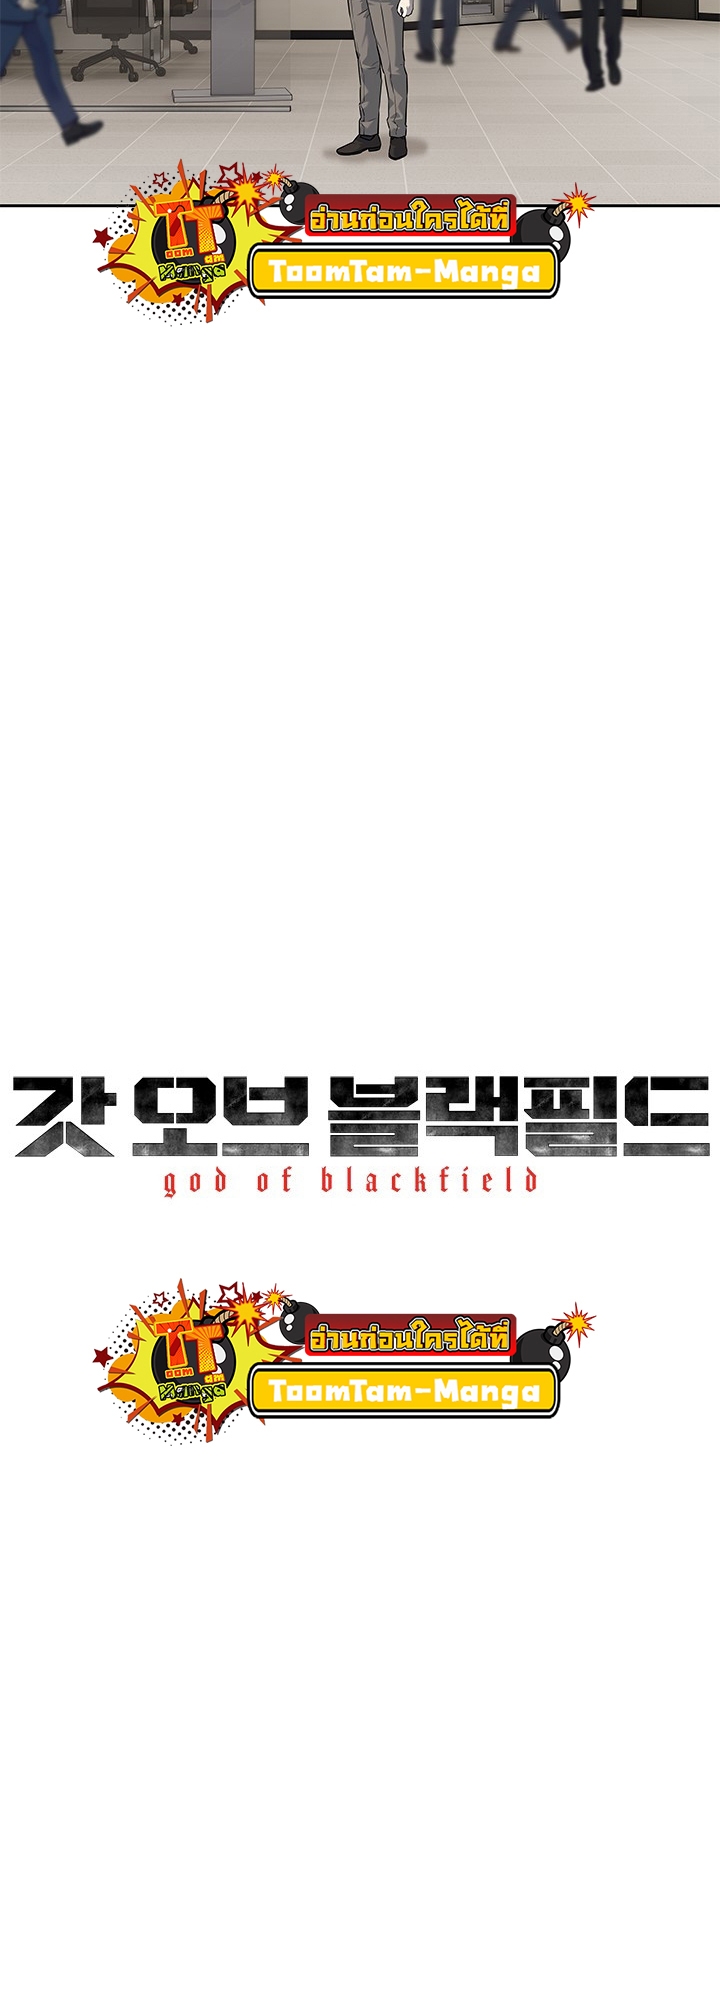 God of Blackfield 192 12 1 25670005